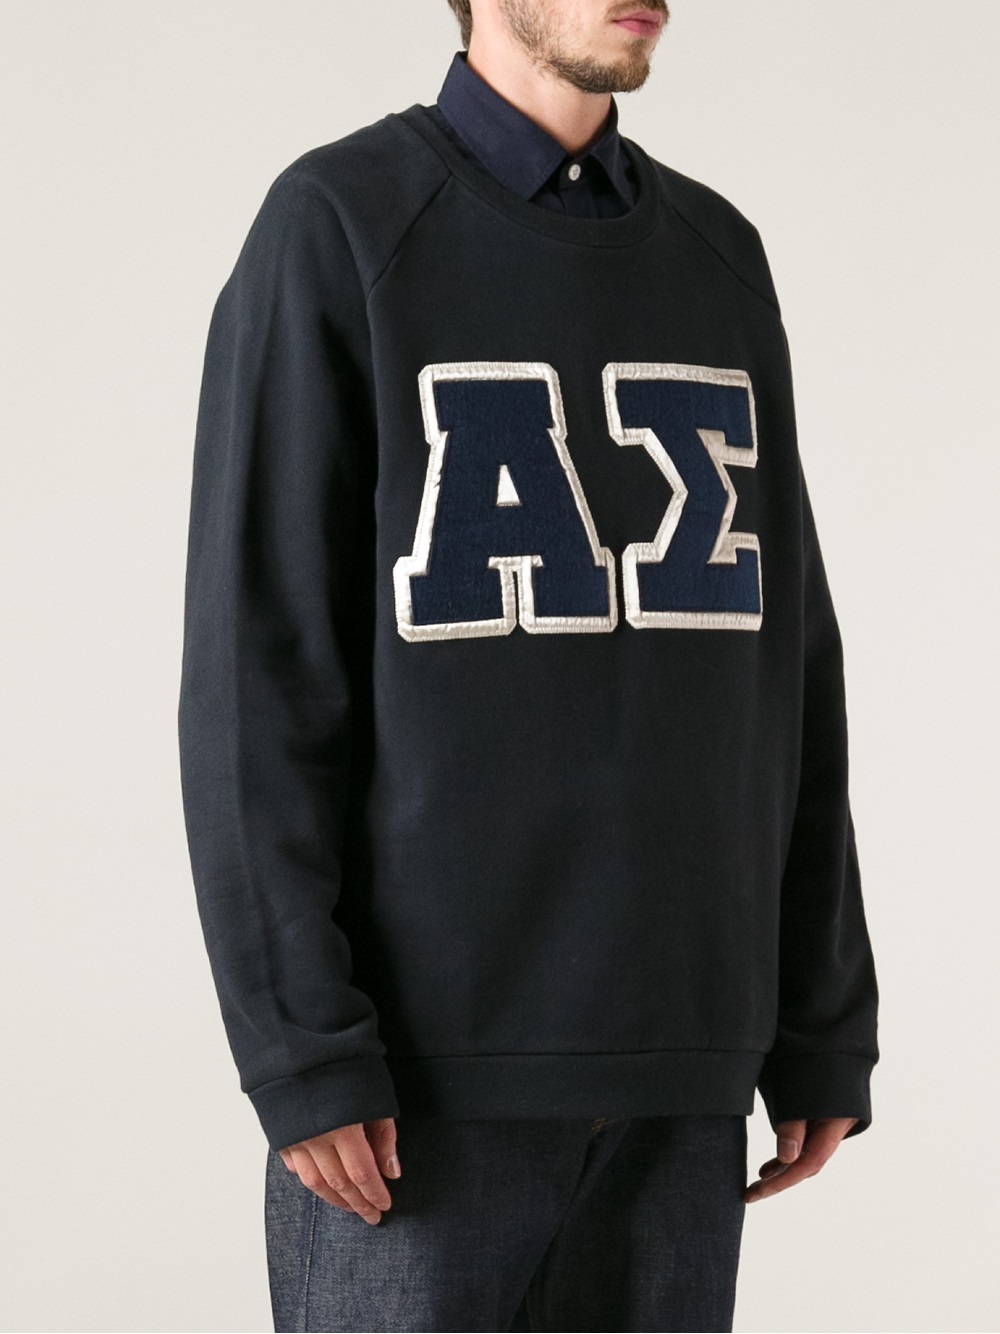 Acne Studios Alpha Sigma College Sweater in Blue for Men - Lyst